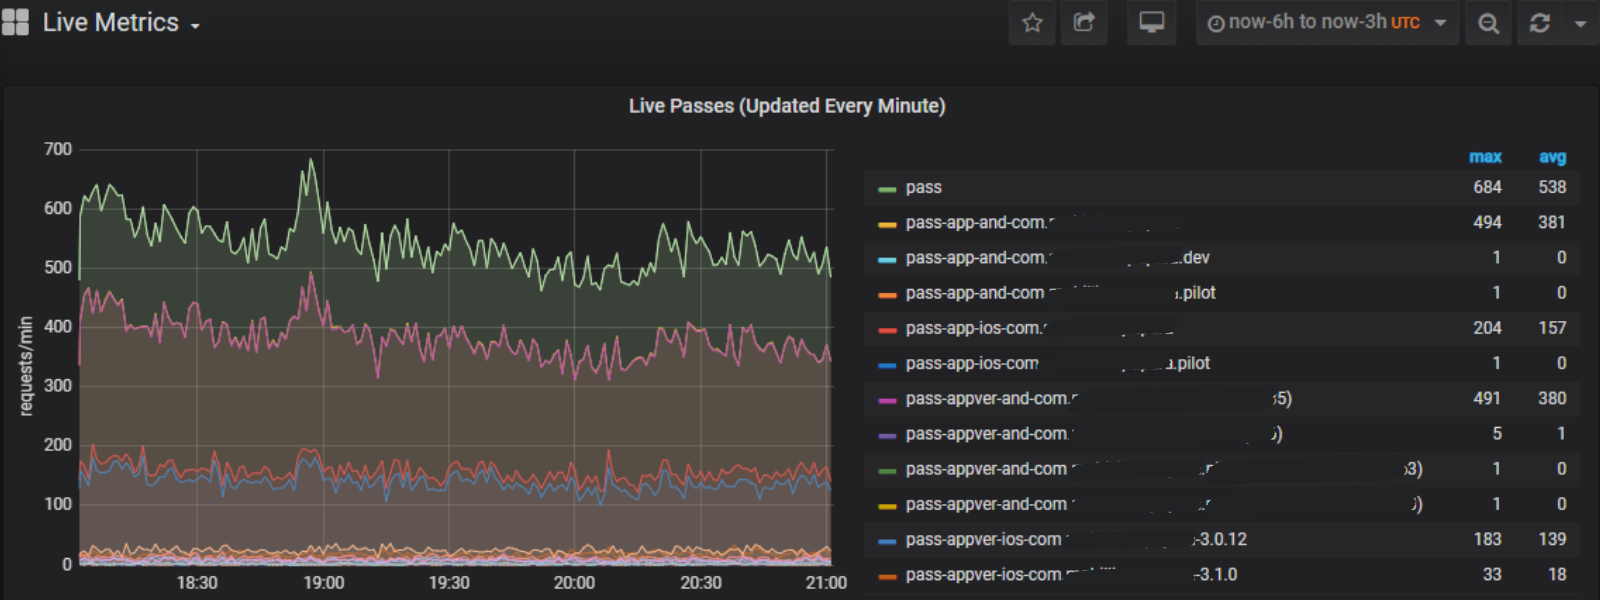 Screenshot of Approov customer metrics graph showing live passes